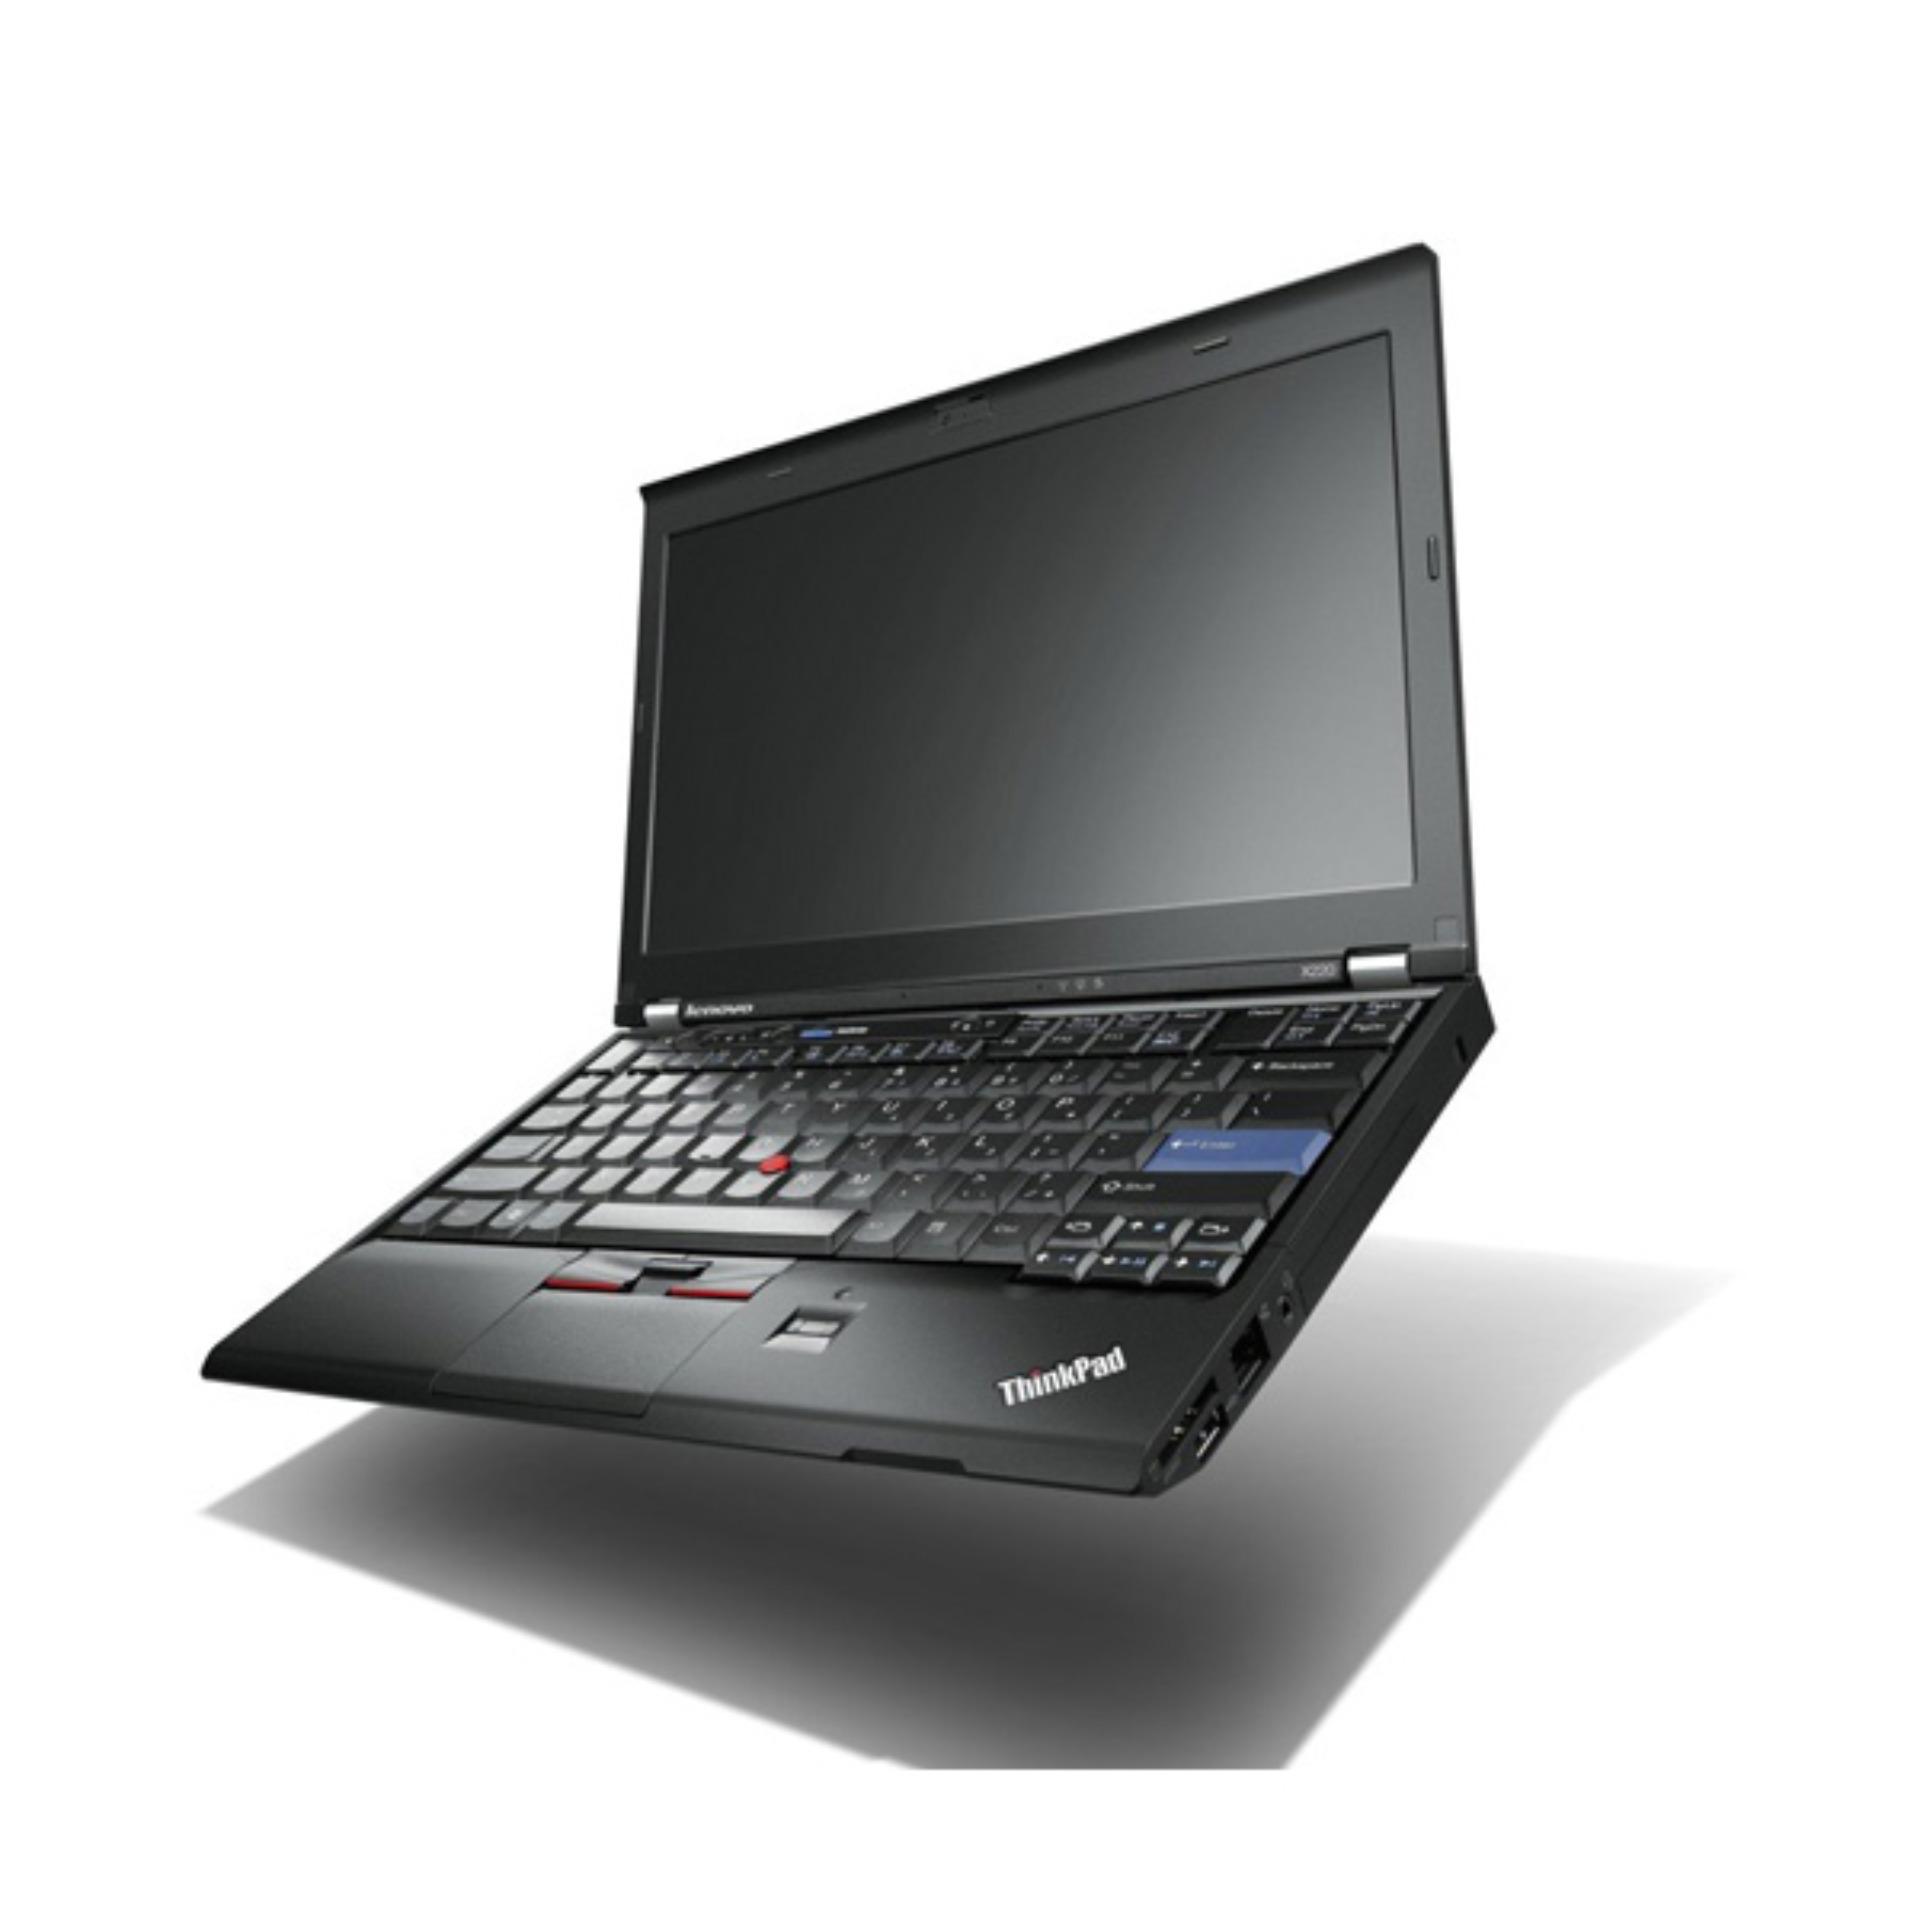 Refurbished Lenovo X220 Laptop / Celeron / 4GB RAM / 320GB HDD / Window 7 / 1 Mth Warranty